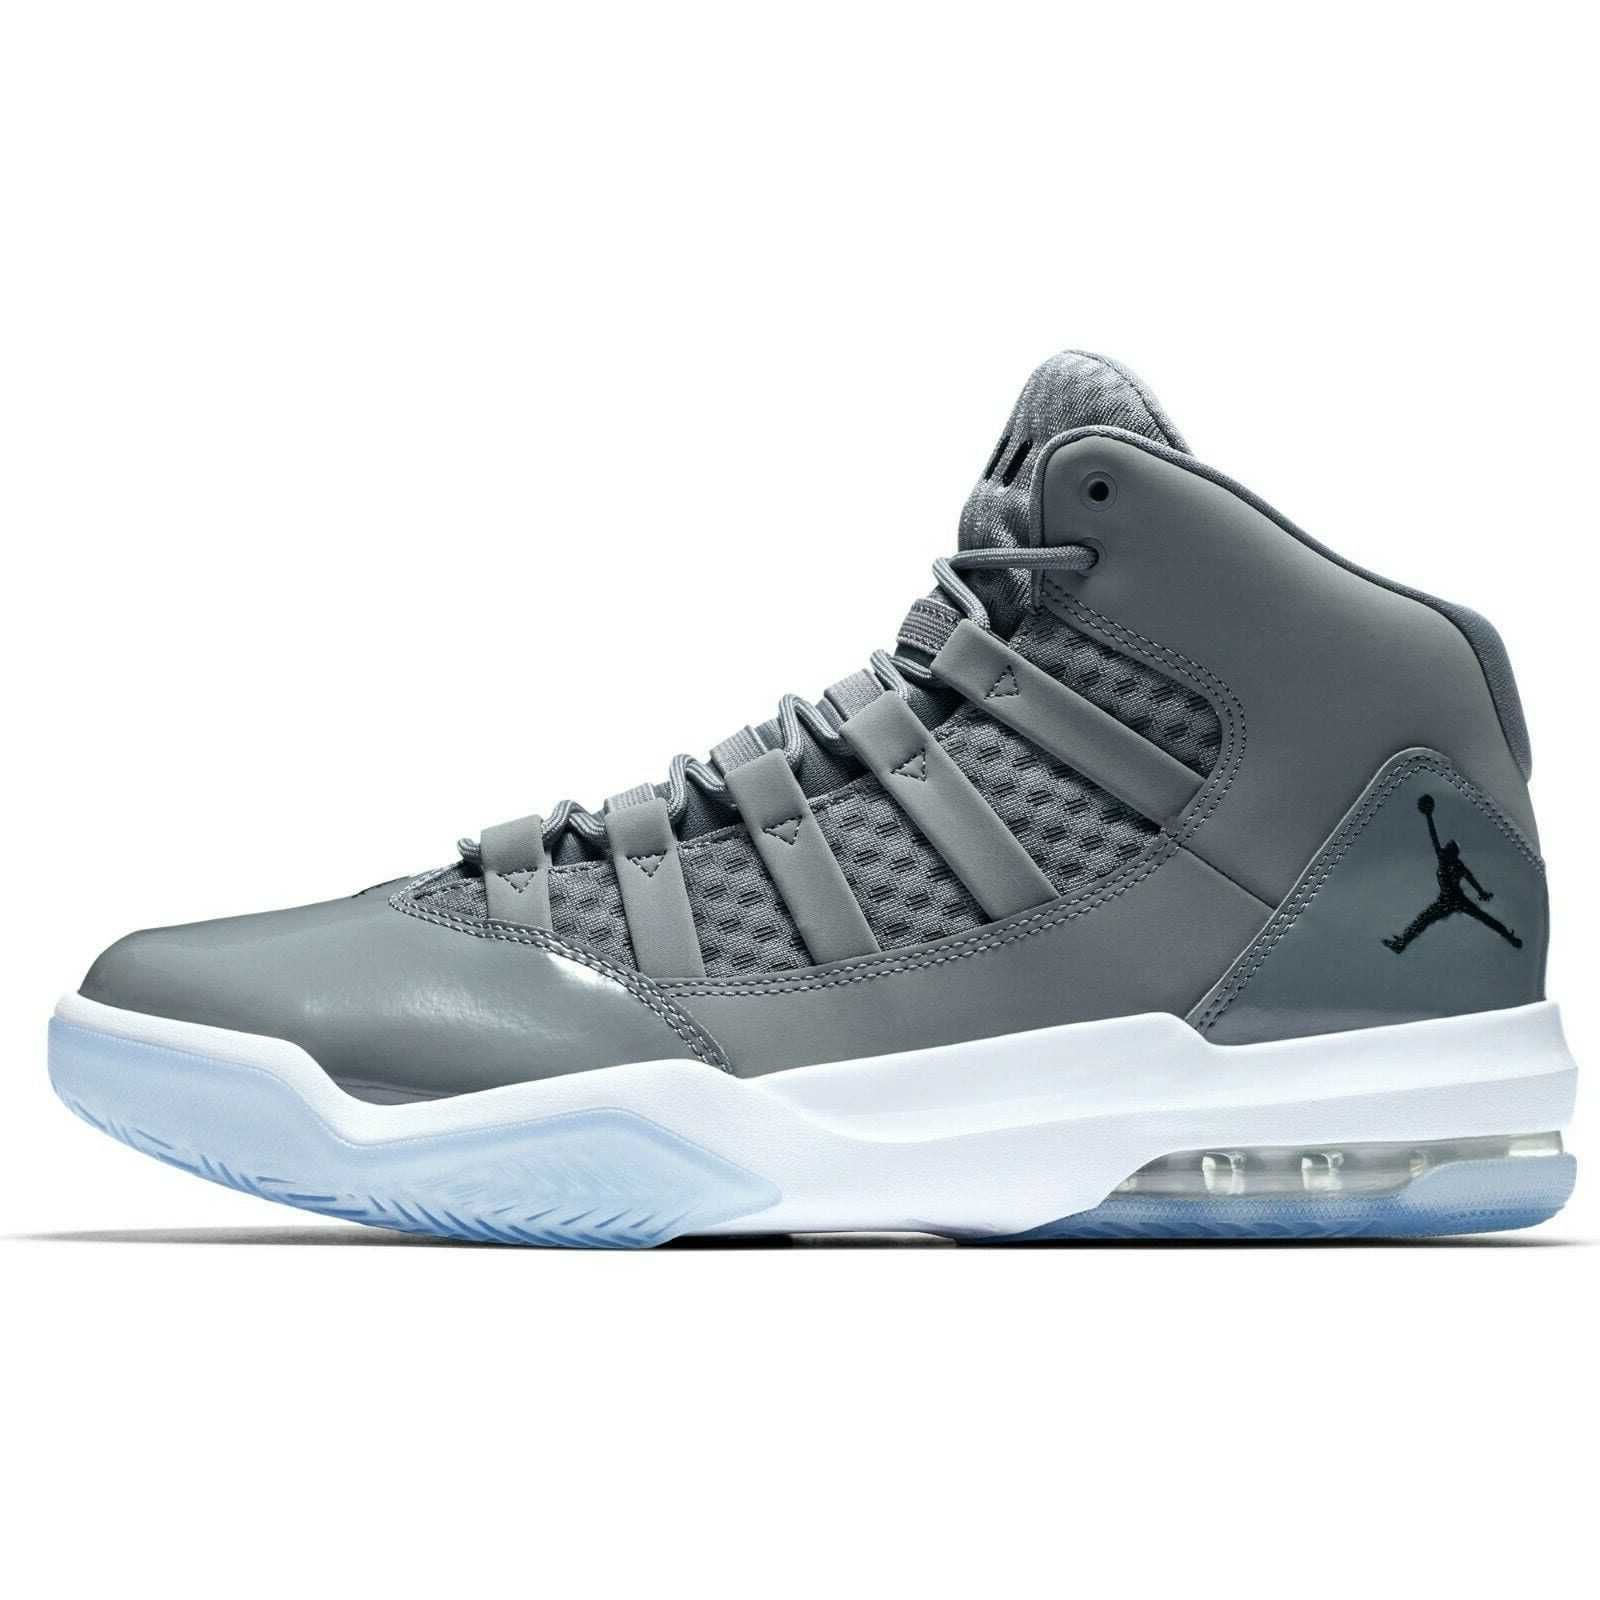 Nike Jordan Max Aura Cool Gray/ Black White 
AQ9084-010
41